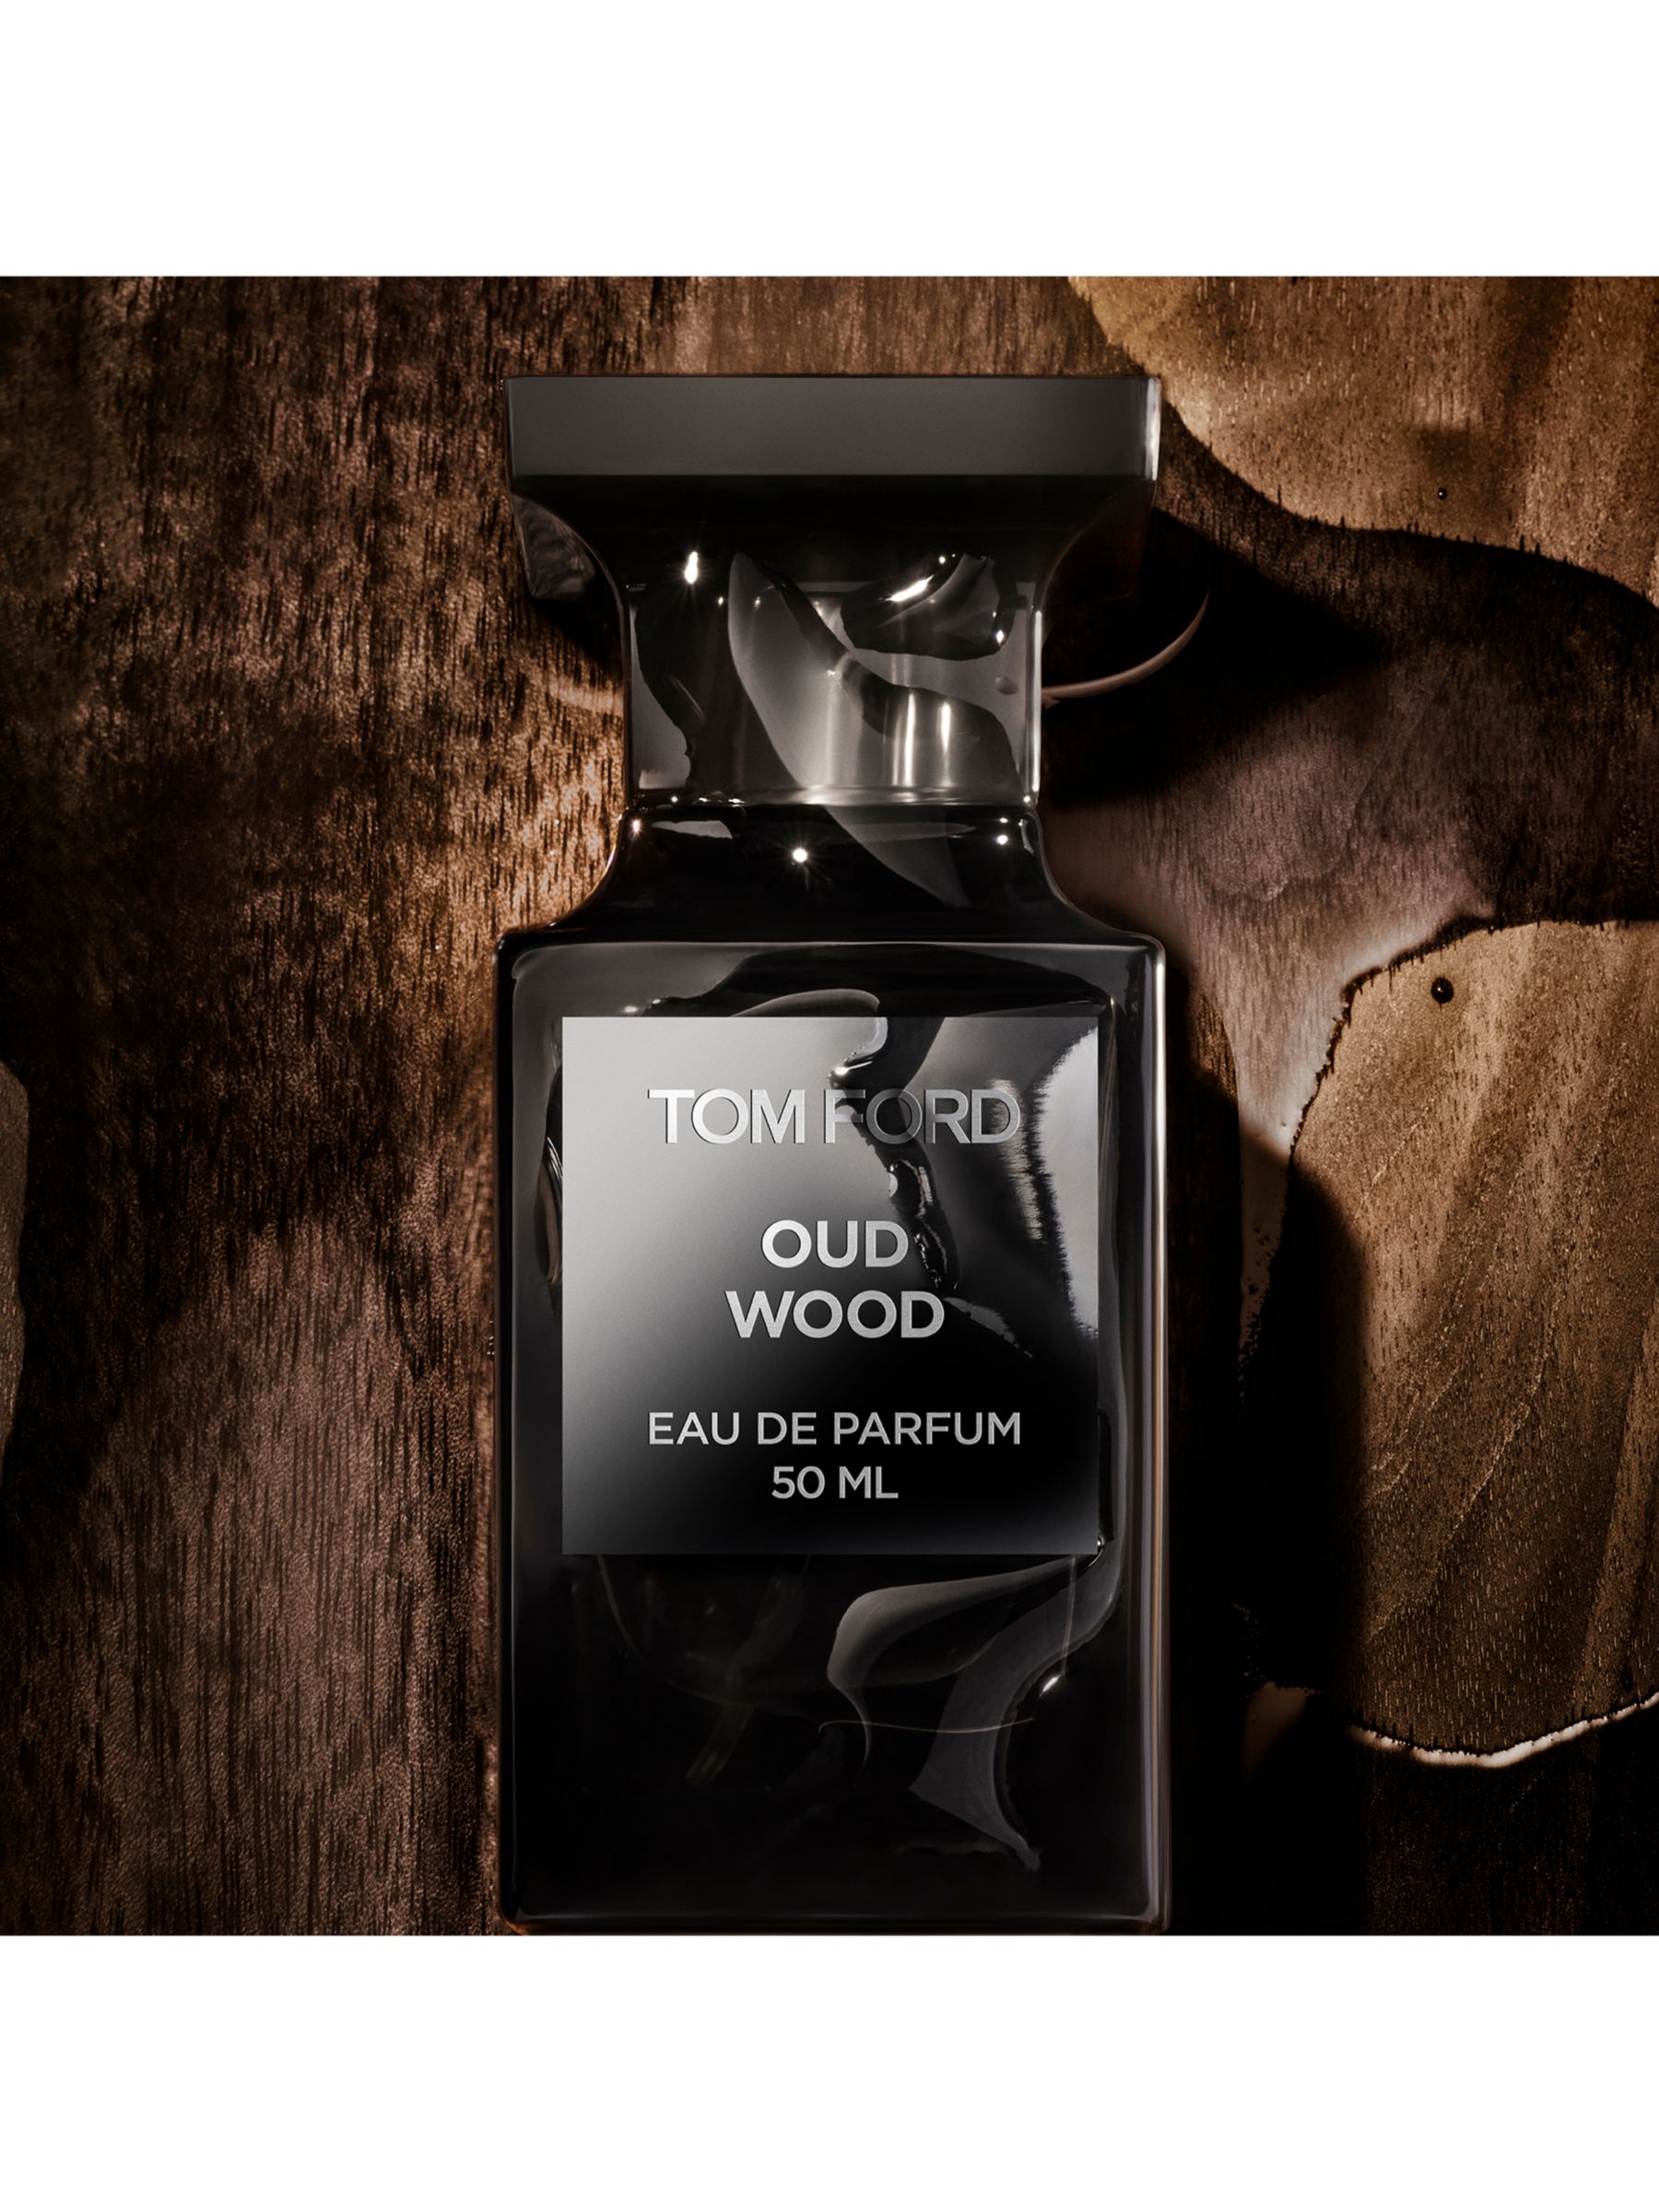 TOM FORD Private Blend Oud Wood Eau De Parfum, 50ml